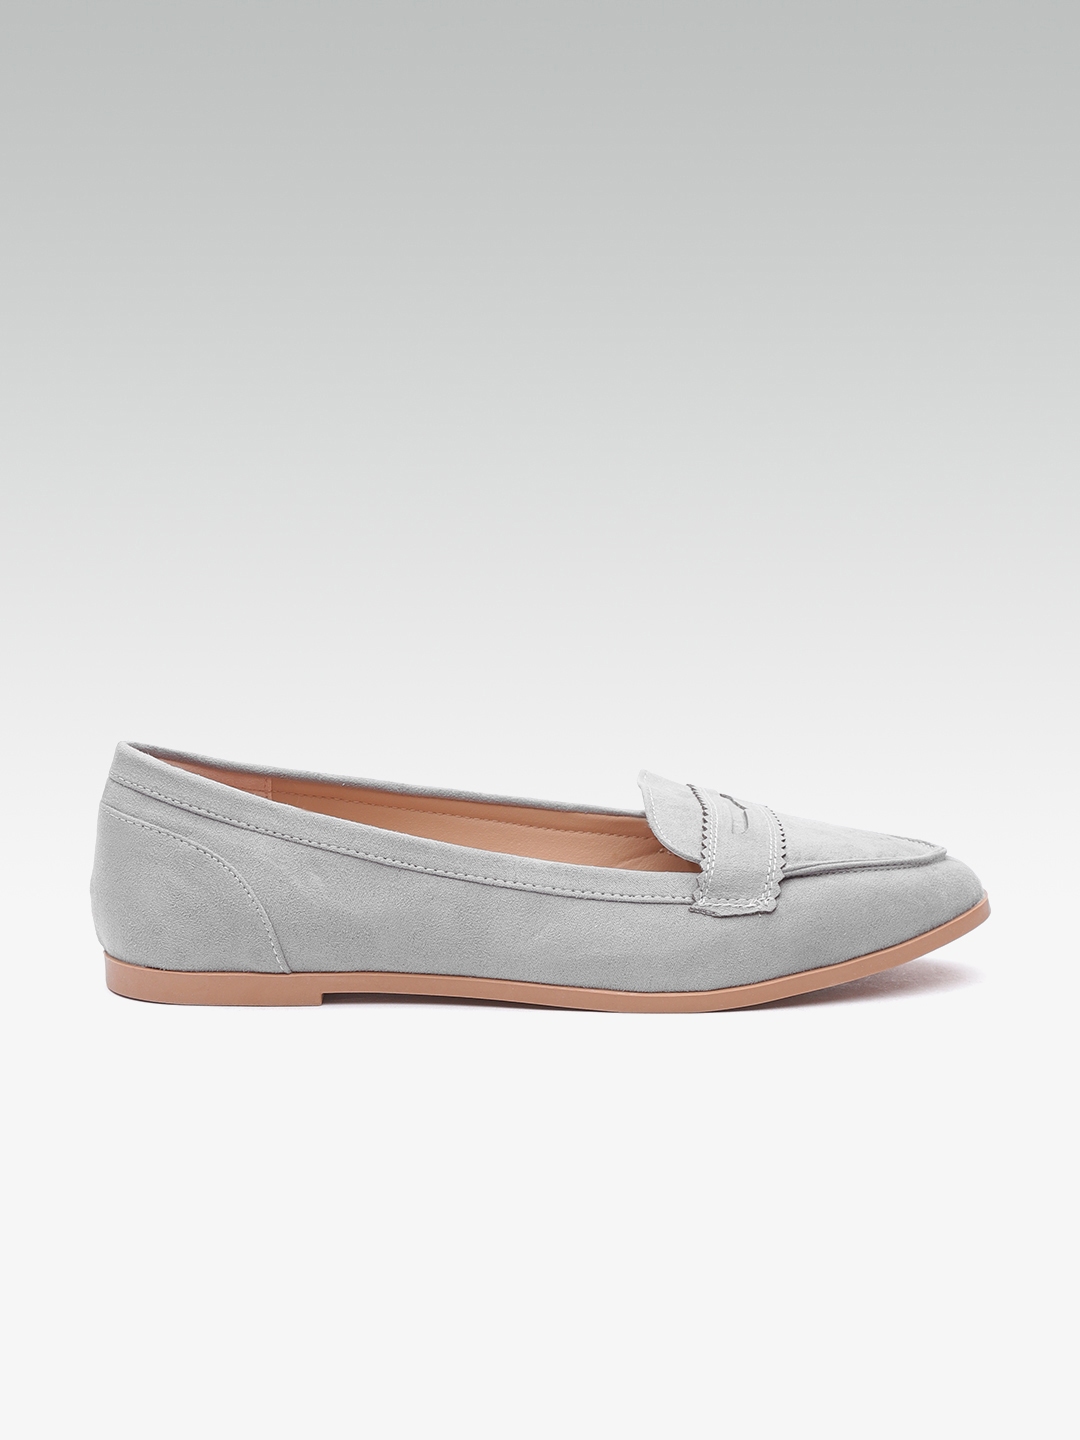 grey shoes dorothy perkins